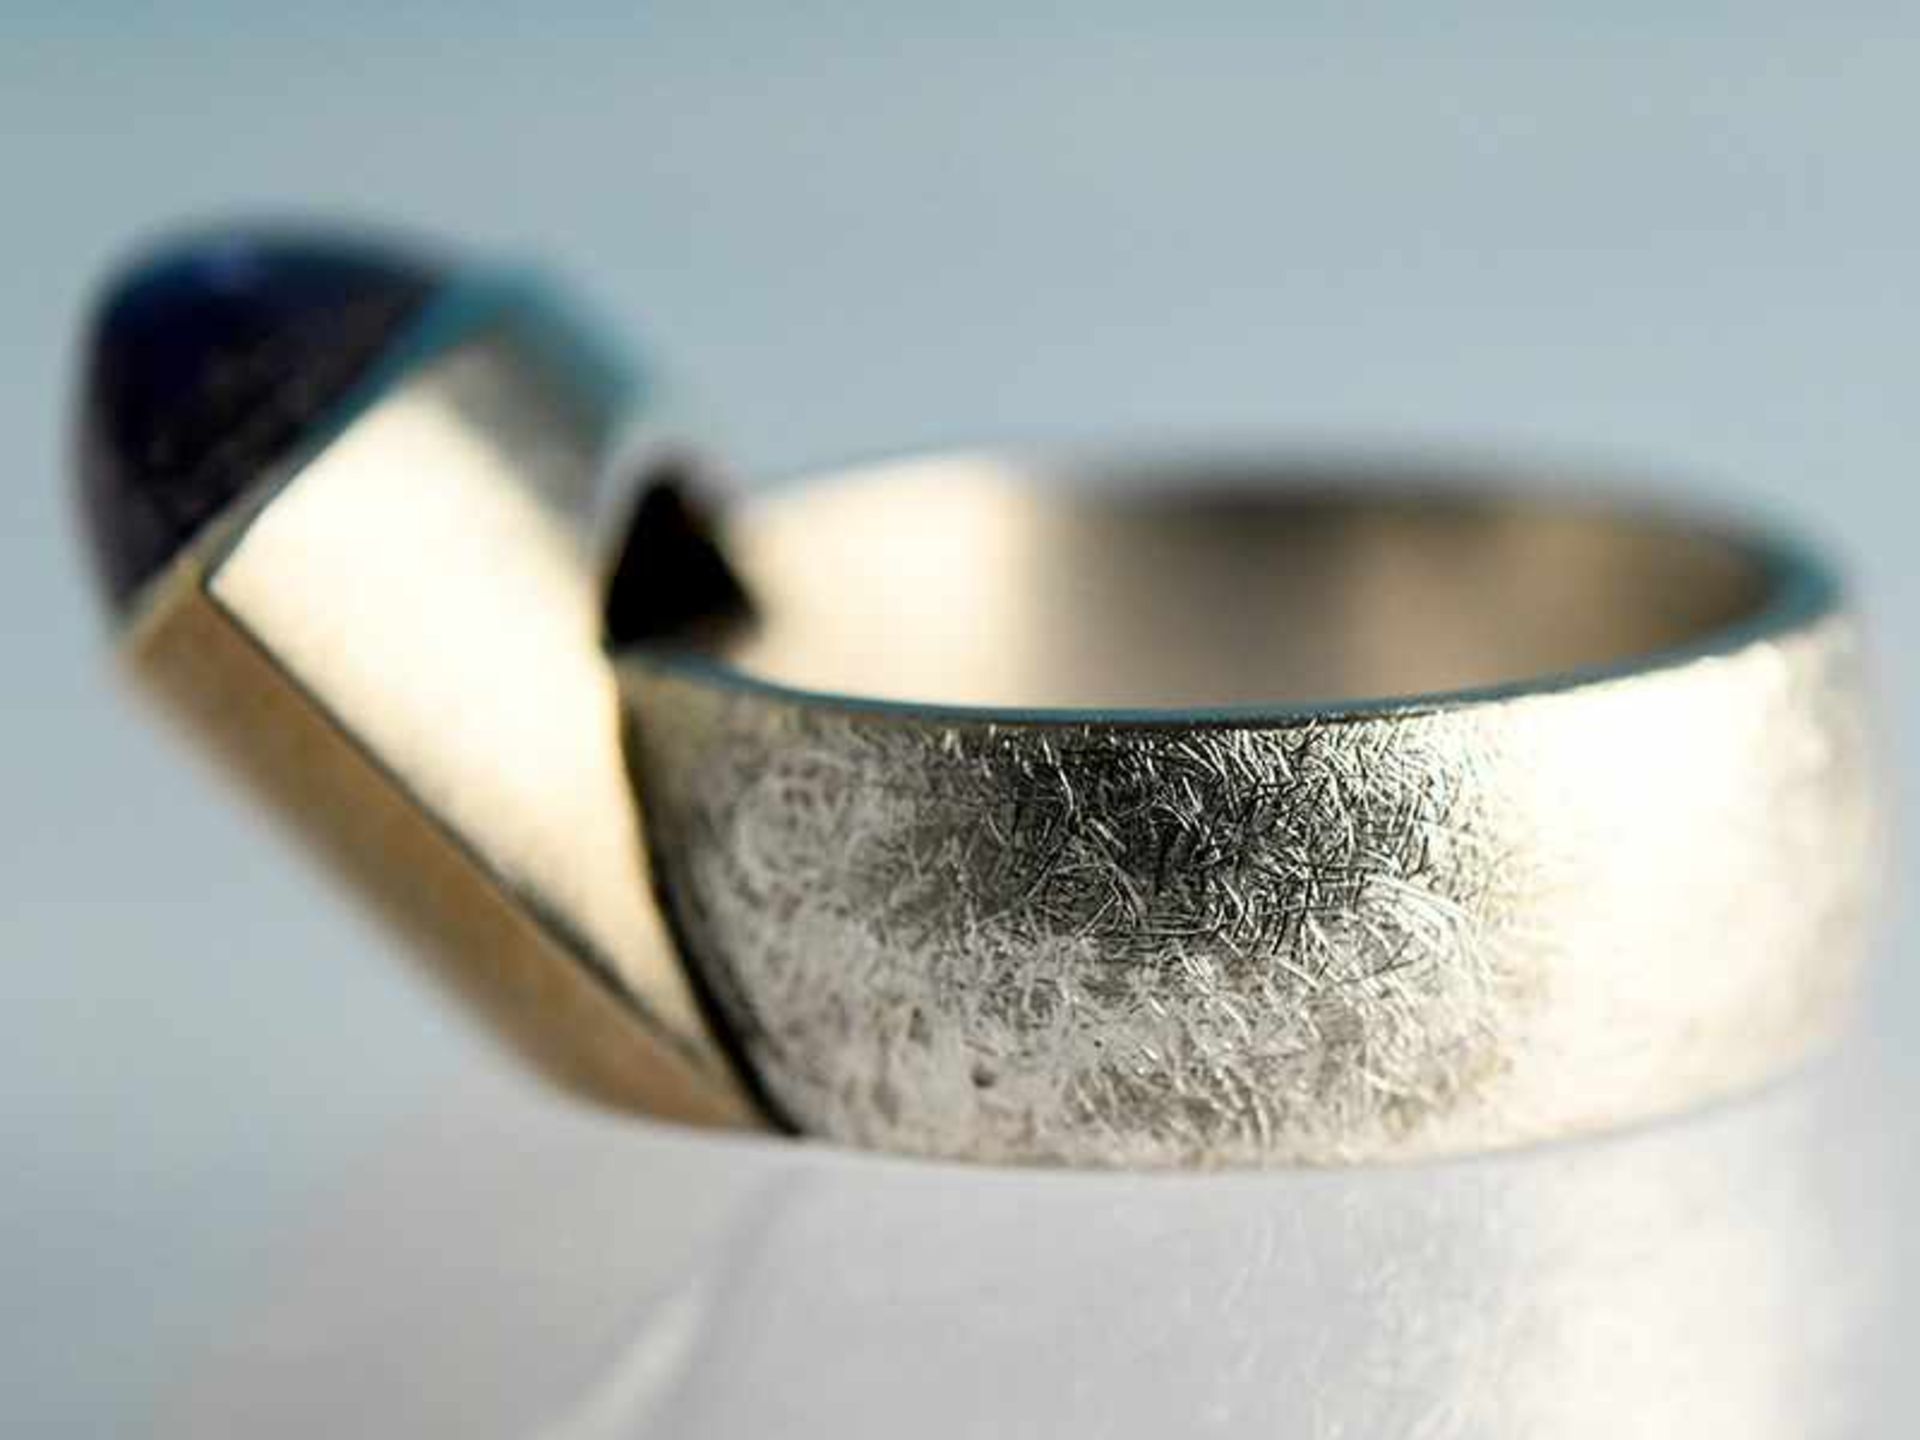 Moderner Ring mit Tansanit-Cabochon, Goldschmiedearbeit, 21. Jh. 925/- Silber und 585/- Gelbgold. - Image 6 of 7